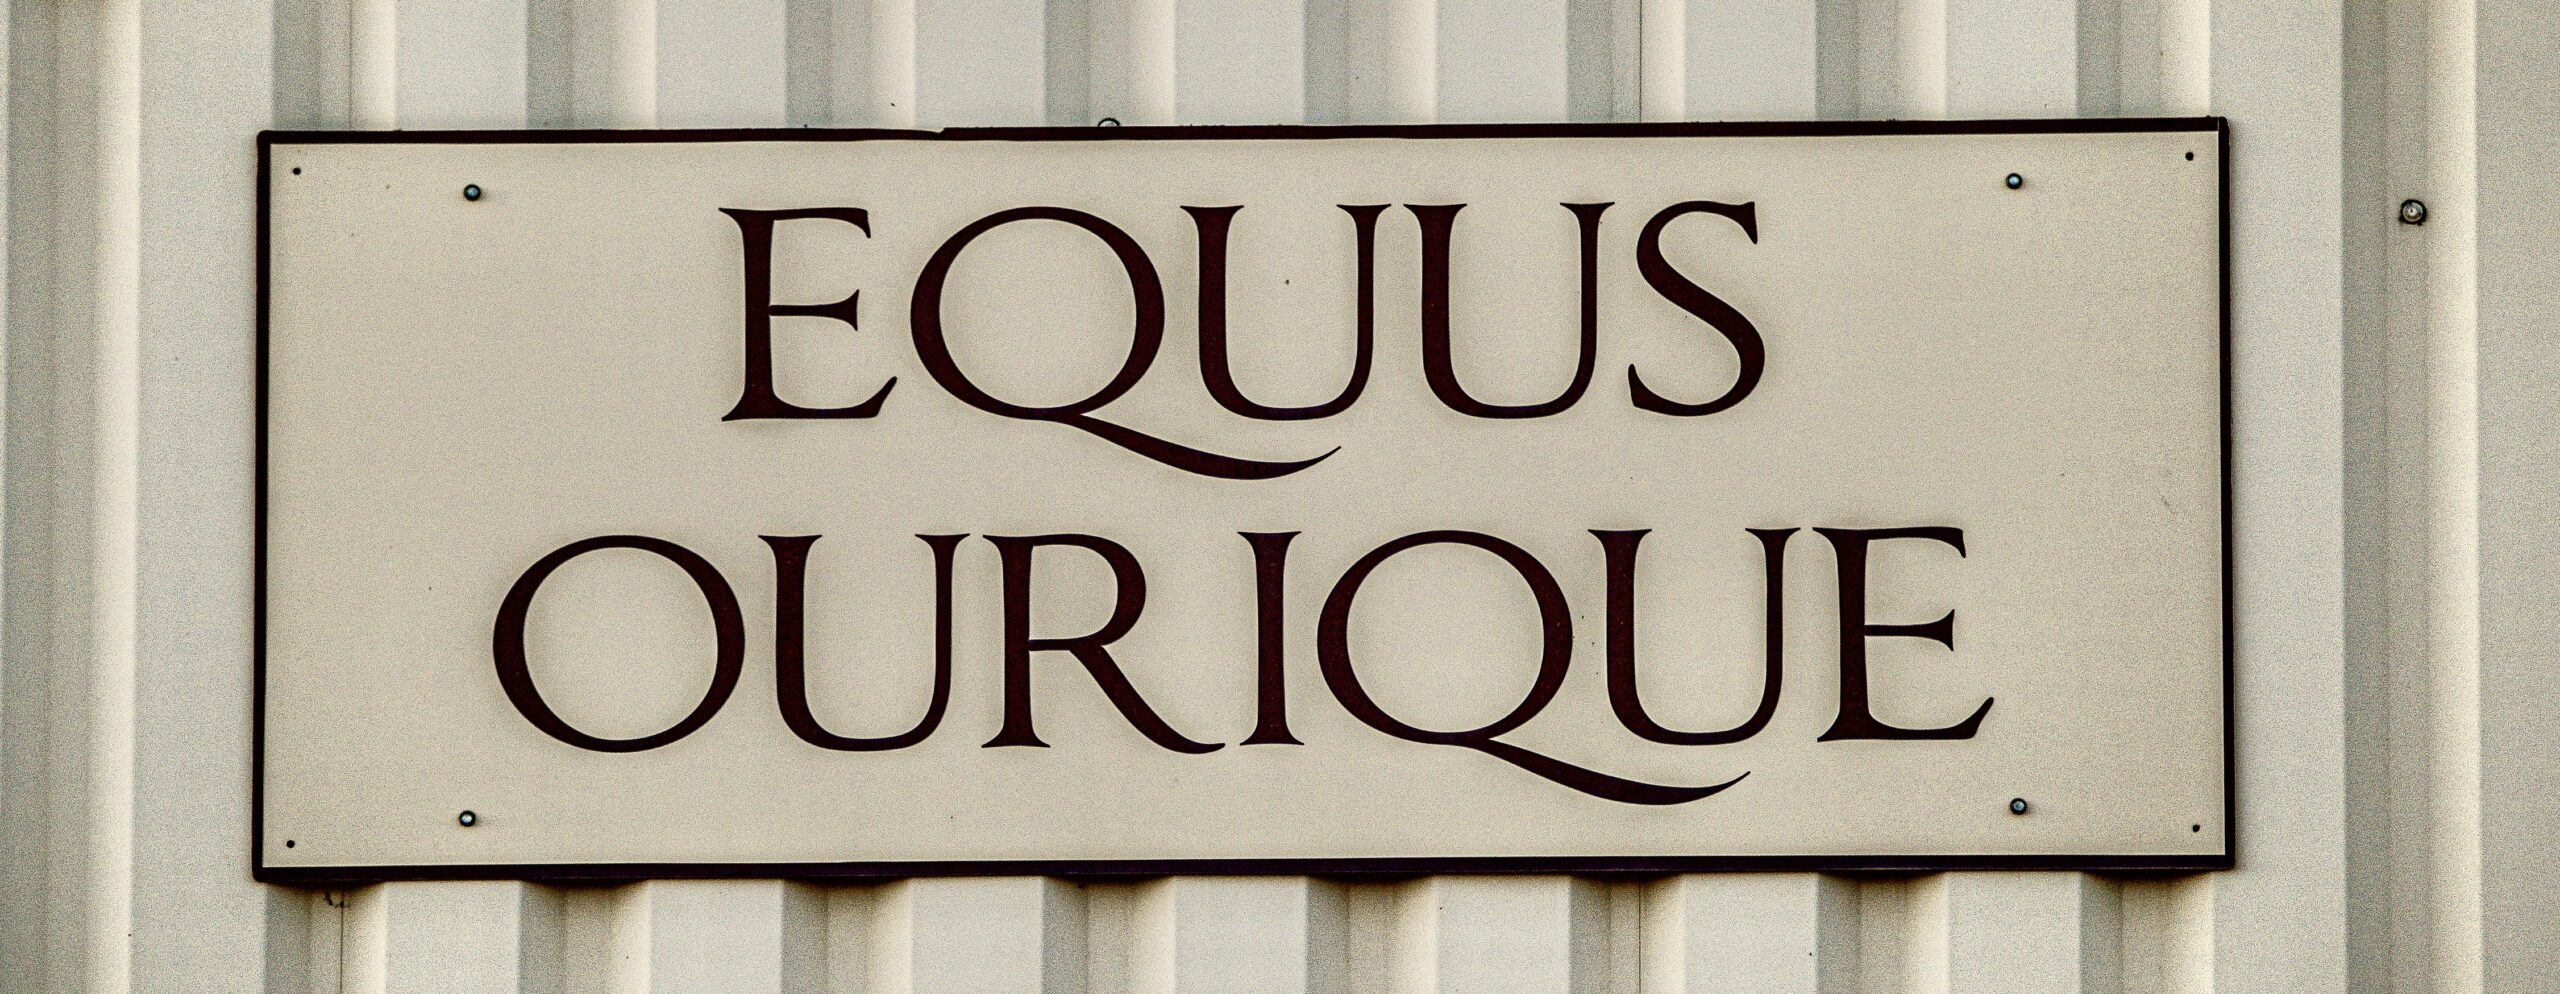 Picture of Equus Ourique lettering